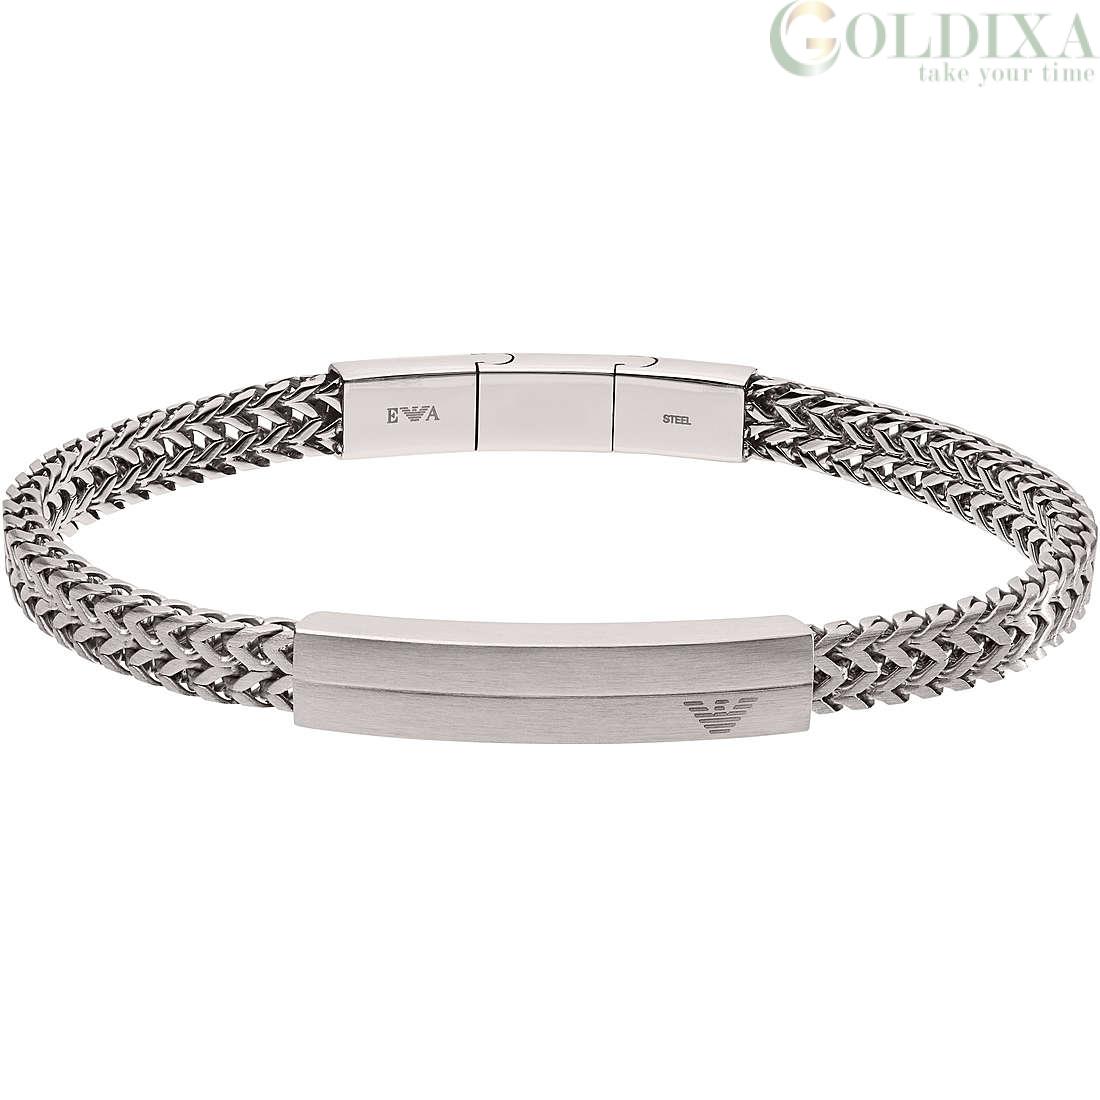 Buy Armani Exchange Leather and Stainless Steel Bracelet  Mens bracelets   Argos